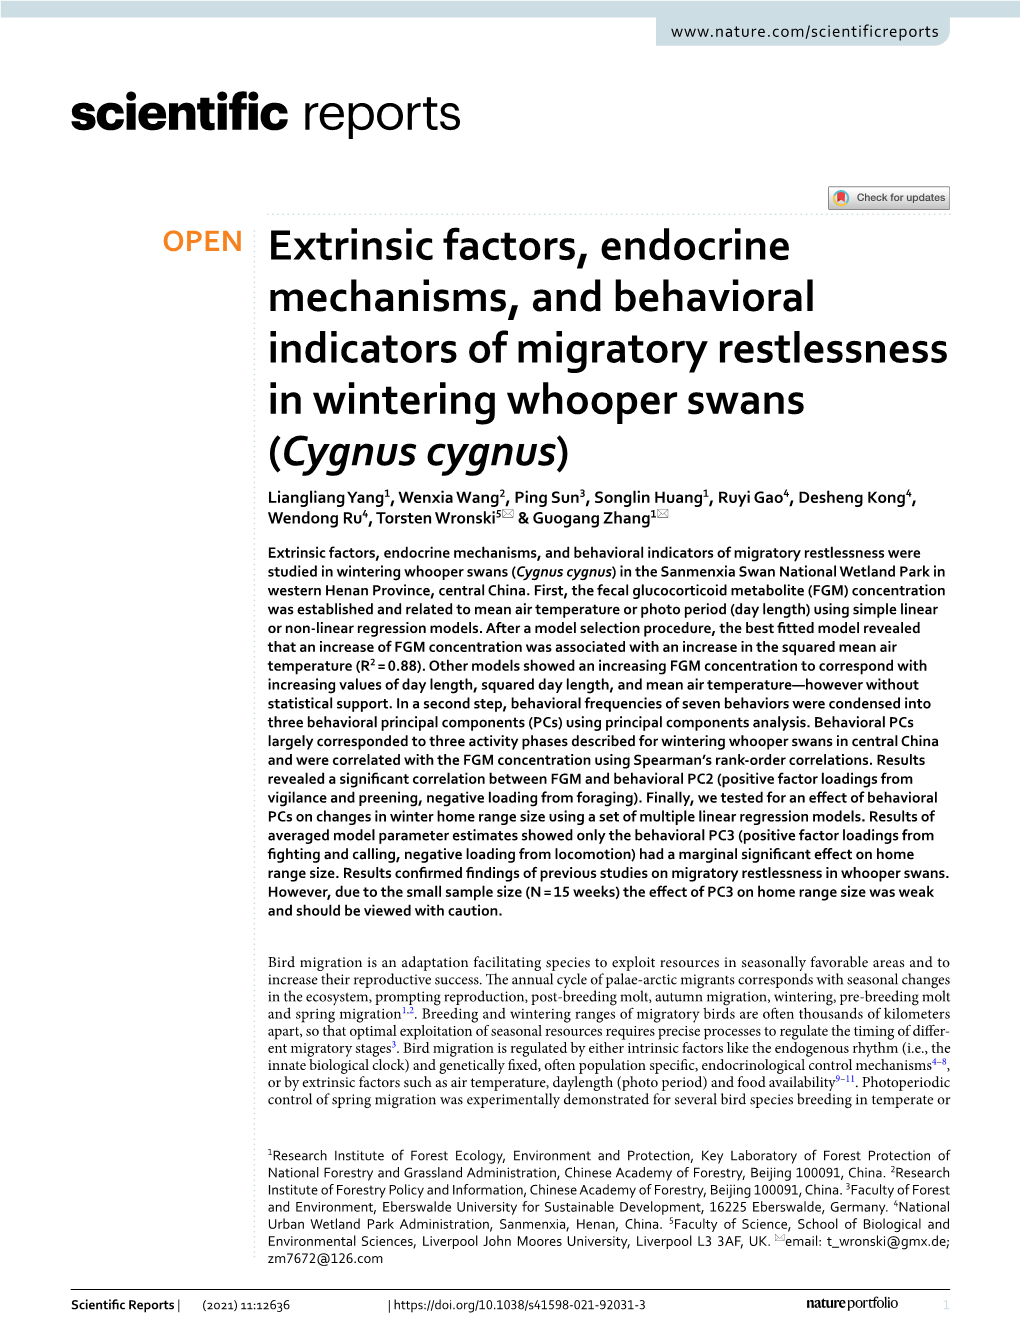 Extrinsic Factors, Endocrine Mechanisms, and Behavioral Indicators of Migratory Restlessness in Wintering Whooper Swans (Cygnus